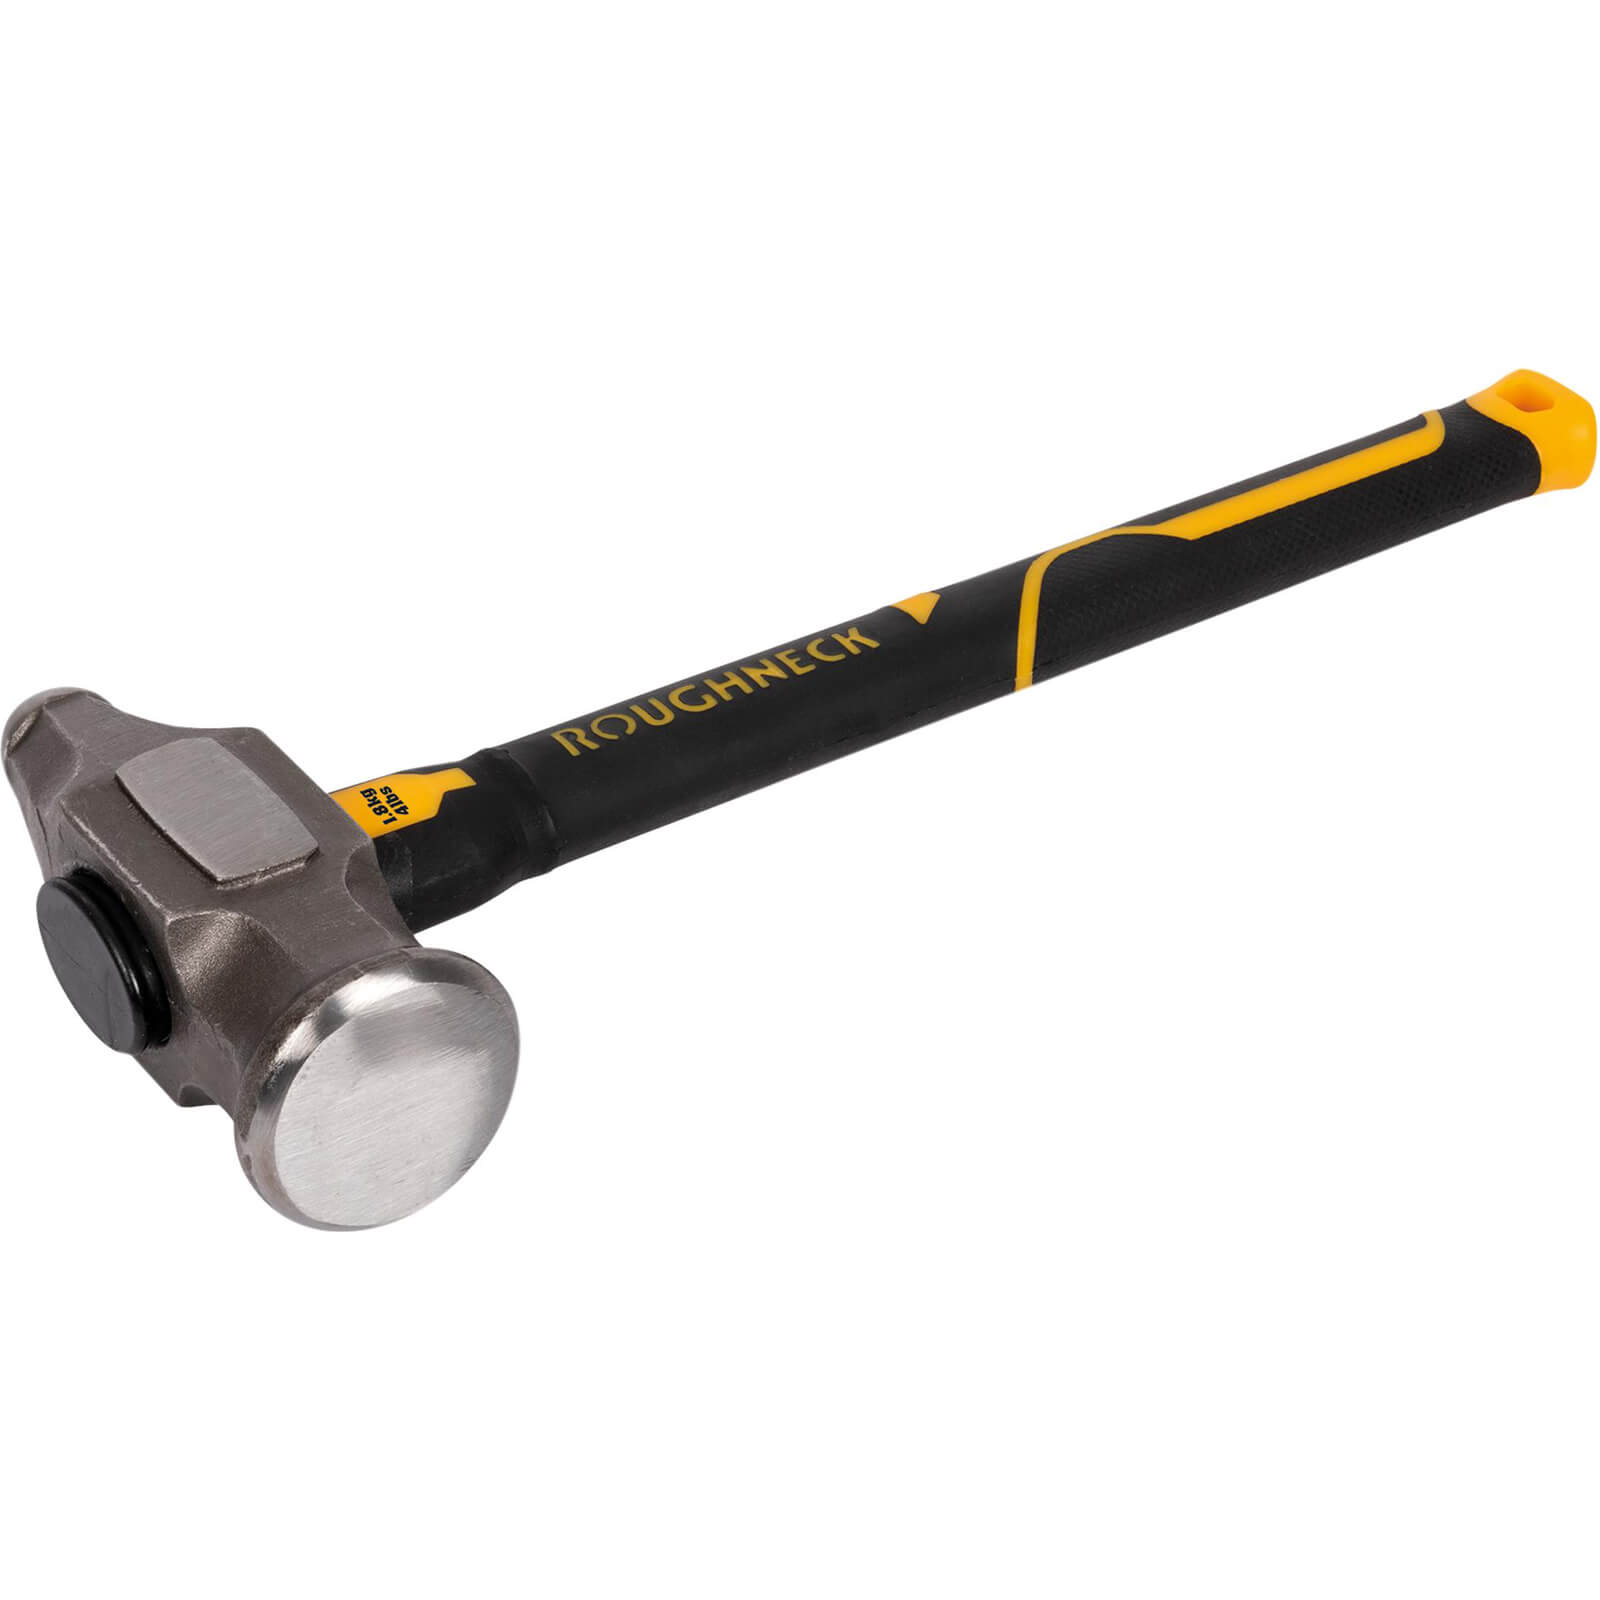 Image of Roughneck Gorilla Mini Sledge Hammer 1.8kg